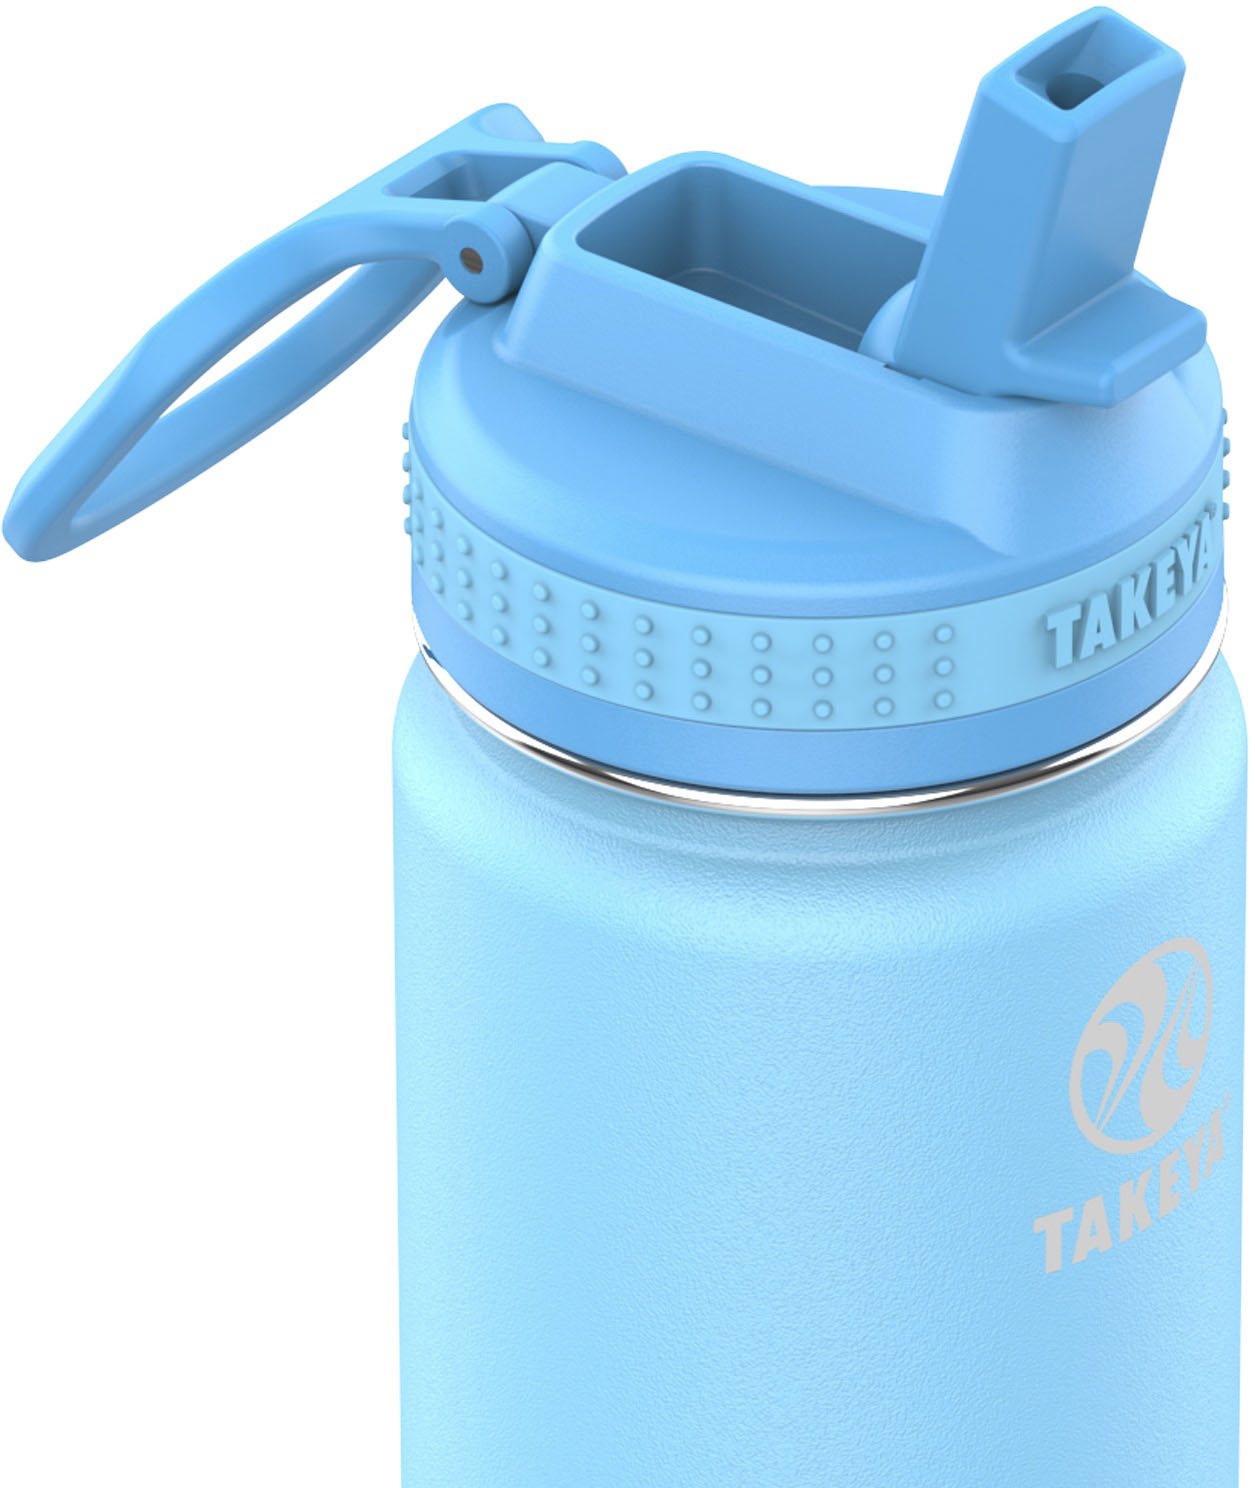 Best Buy: Takeya Actives 24oz Straw Bottle Arctic 51220